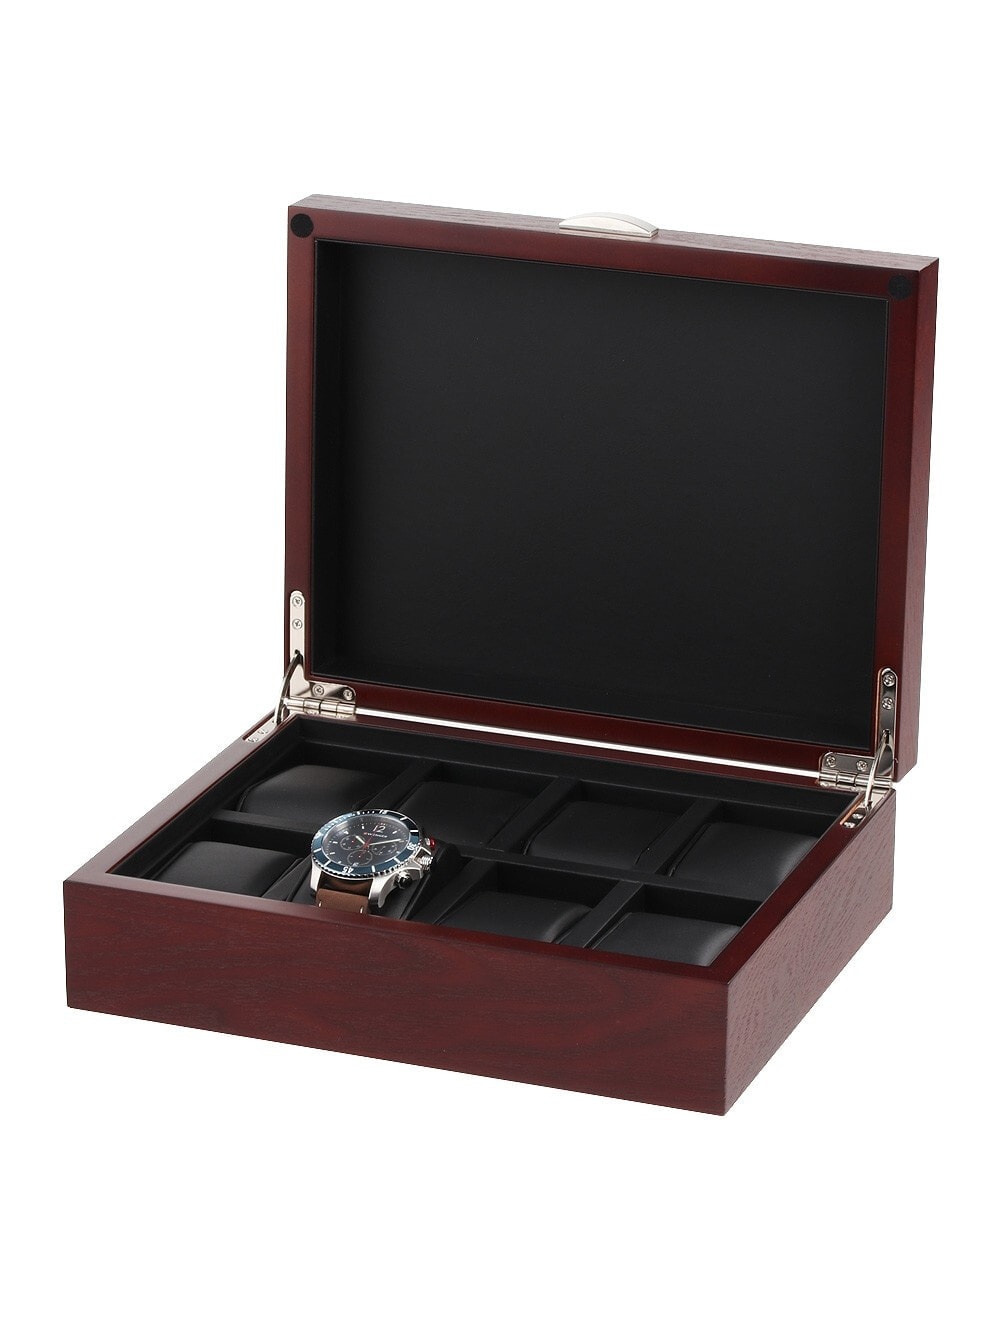 Недорогие часы наручные мужские Rothenschild Watch Box RS-2376-8C For 8 Watches brown